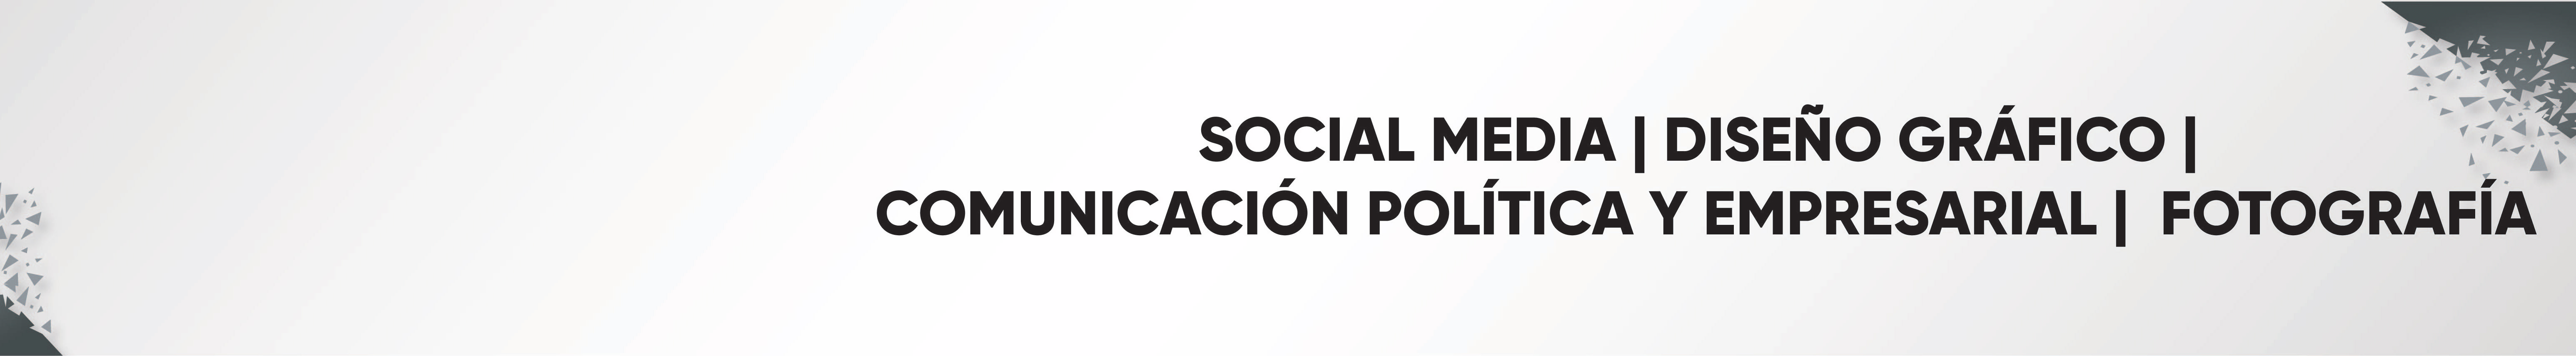 NOUS Agencia Digital's profile banner